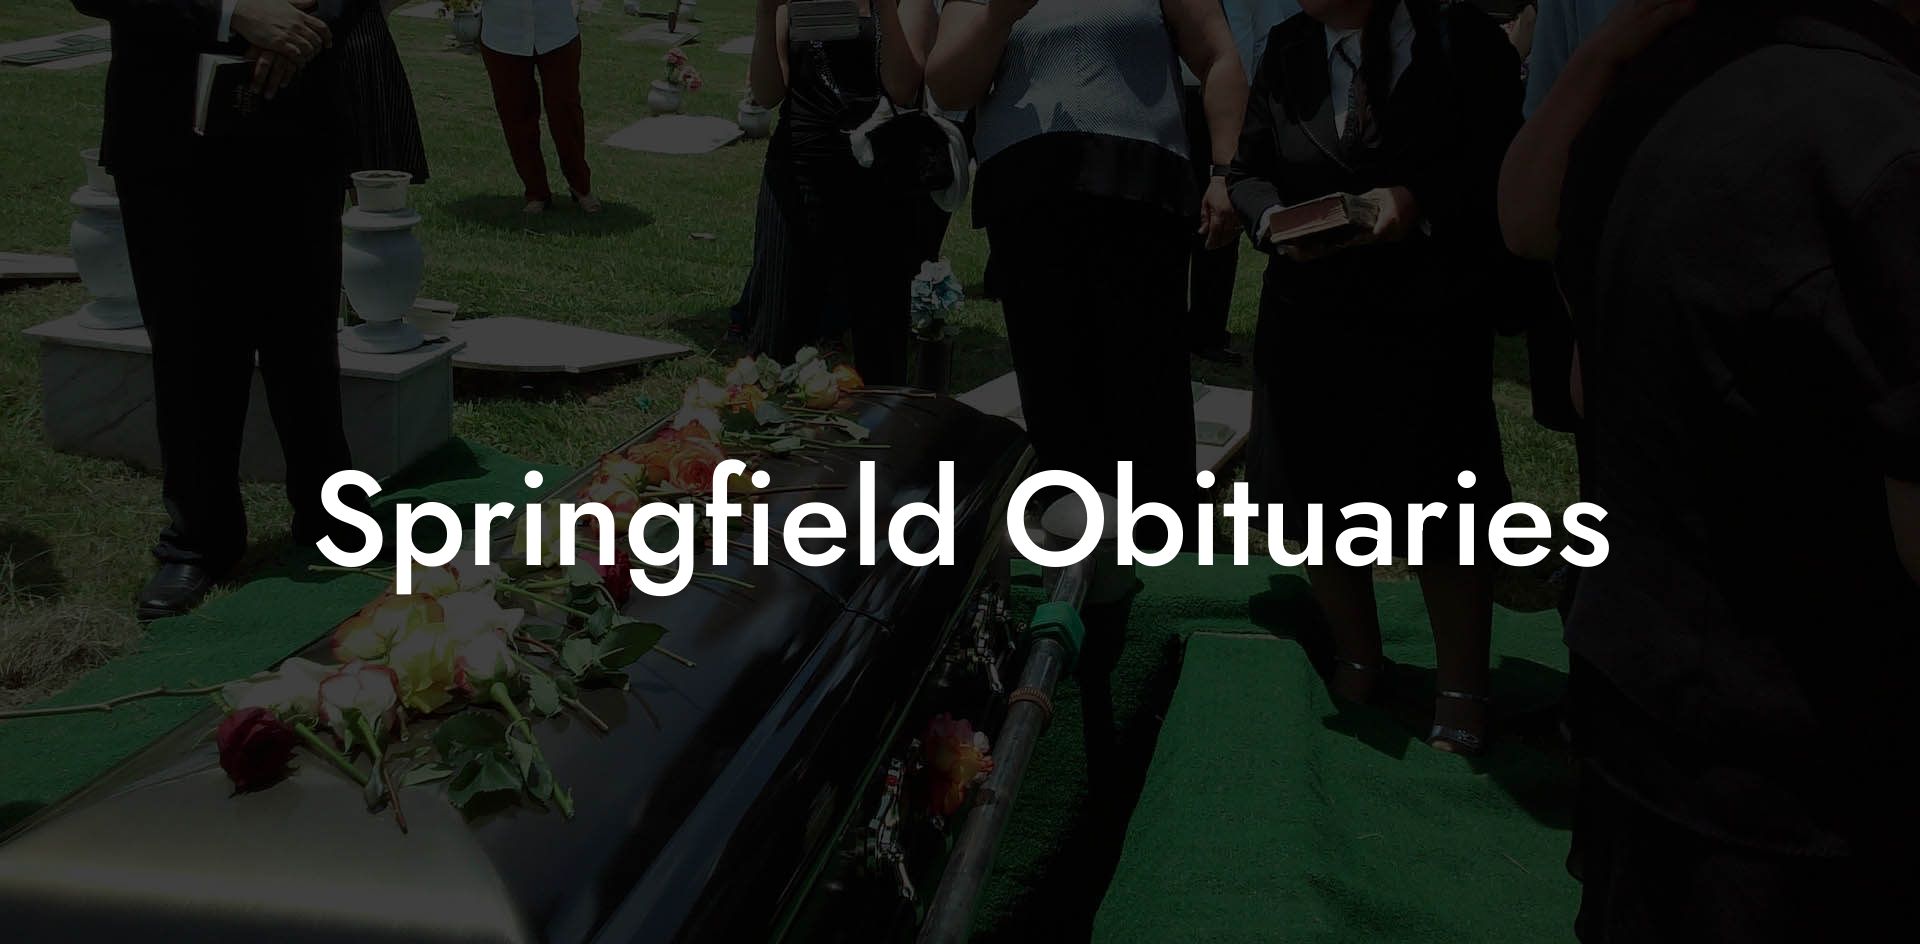 Springfield Obituaries